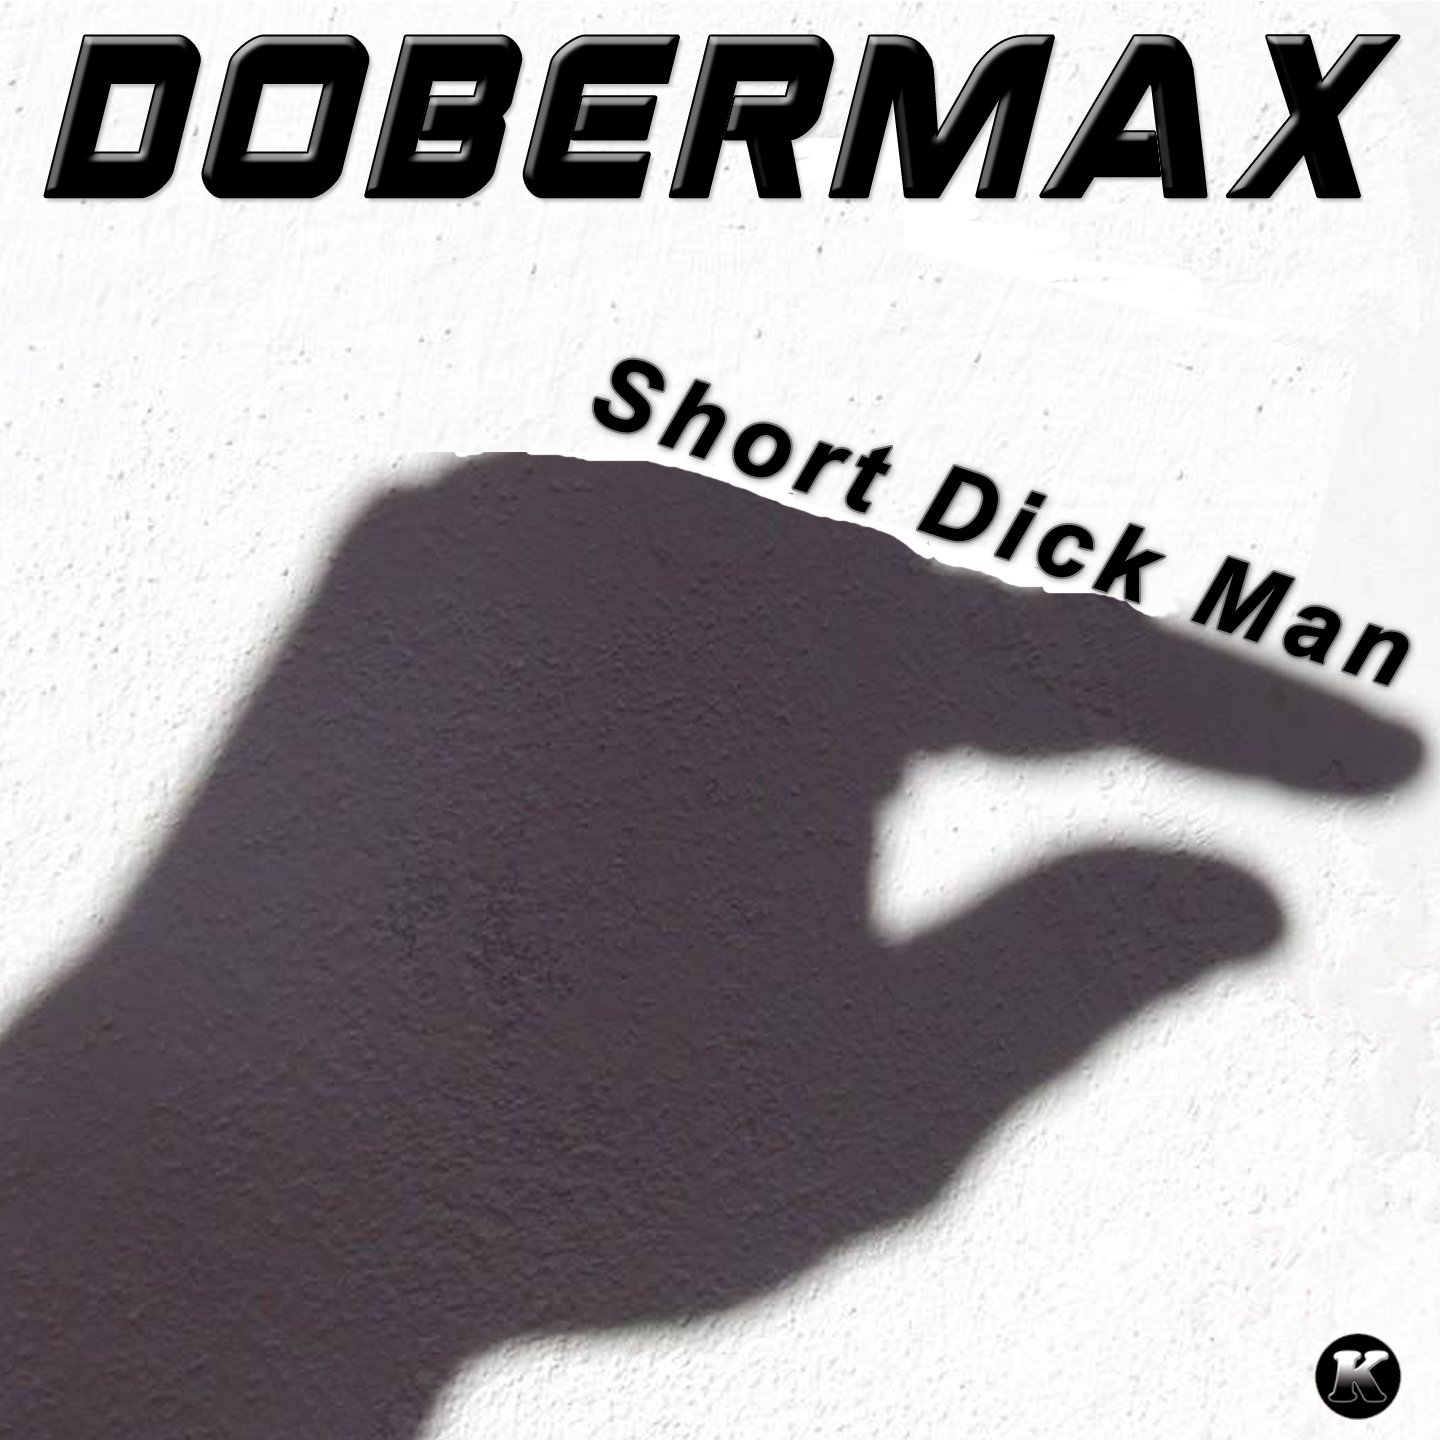 Short dick man слушать. Short dick man текст. Short dick man Автор песни. Short dick man radio